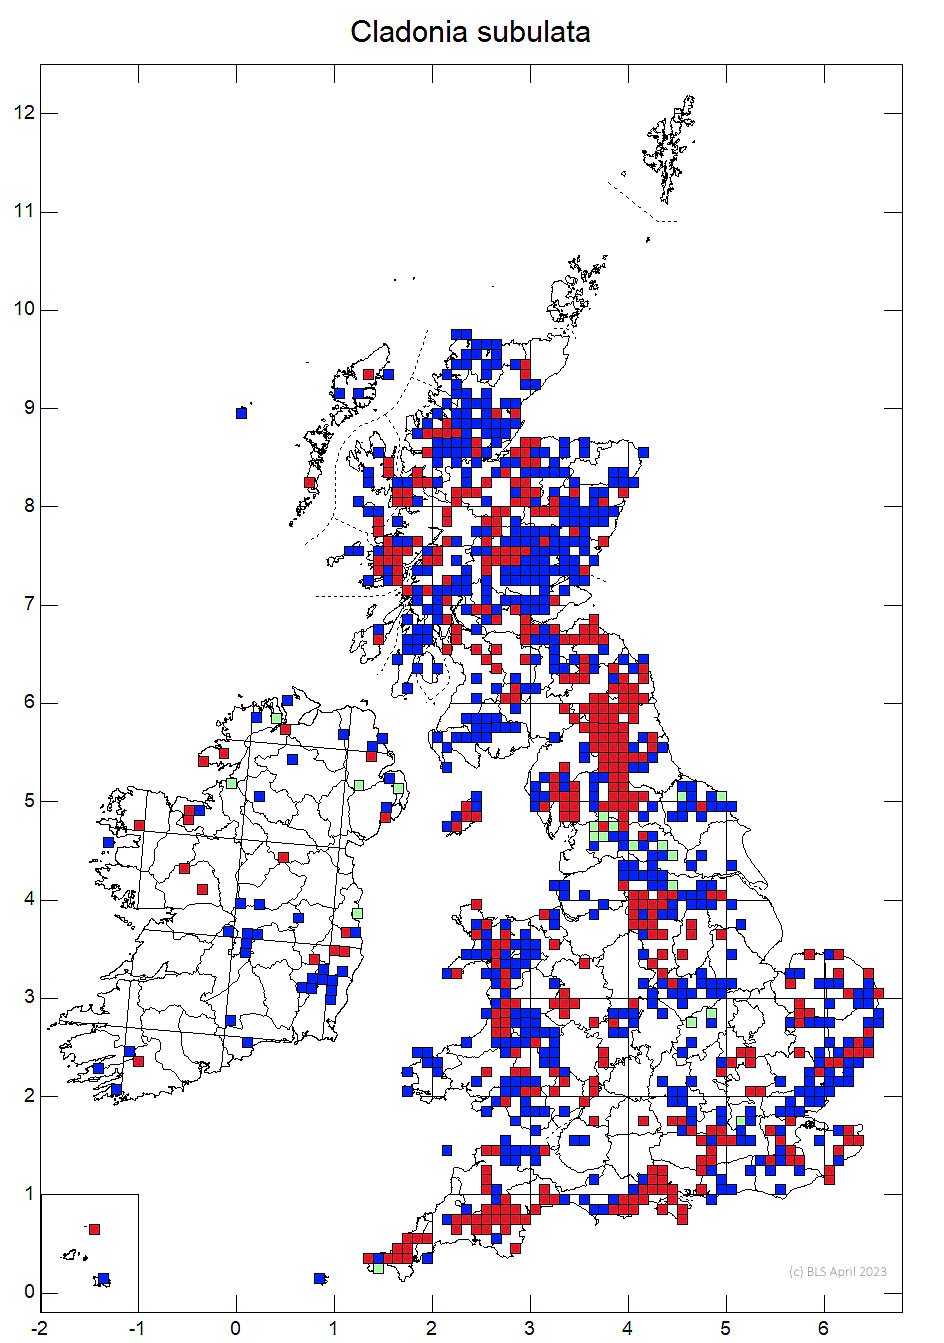 Cladonia subulata 10km sq distribution map